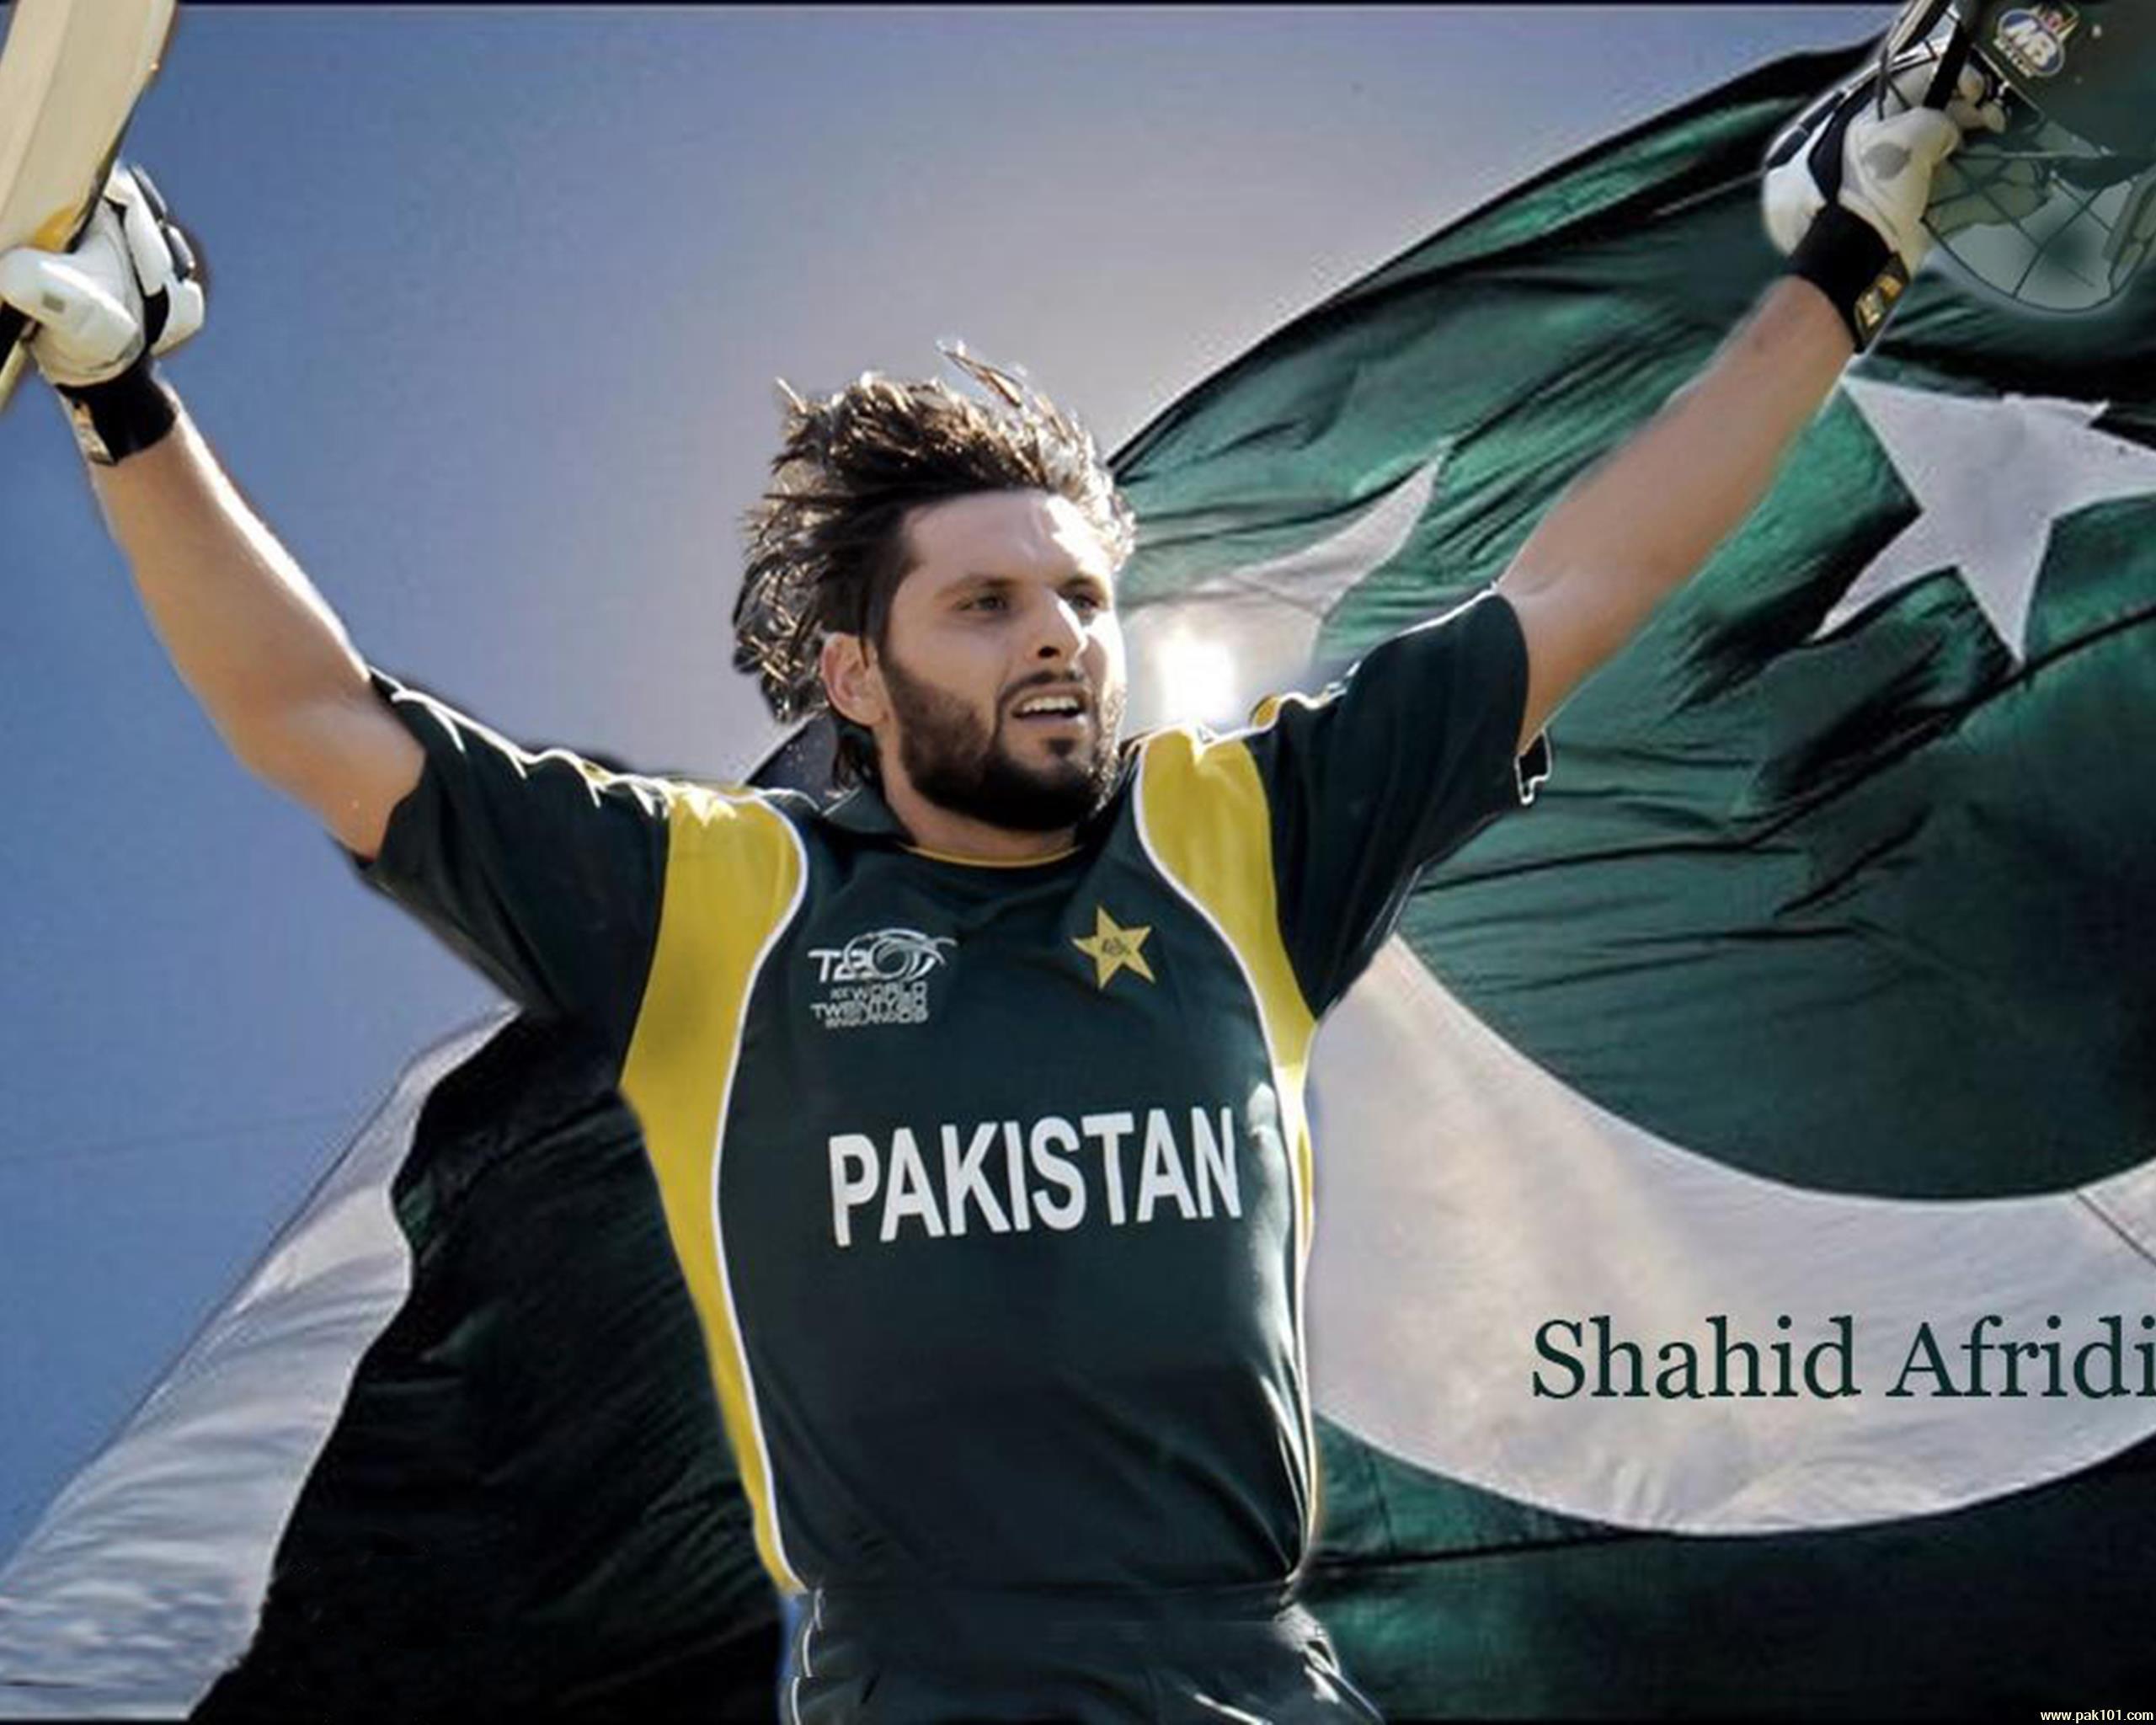 Wallpaper > Cricketers > Shahid Afridi > Shahid Afridi high quality